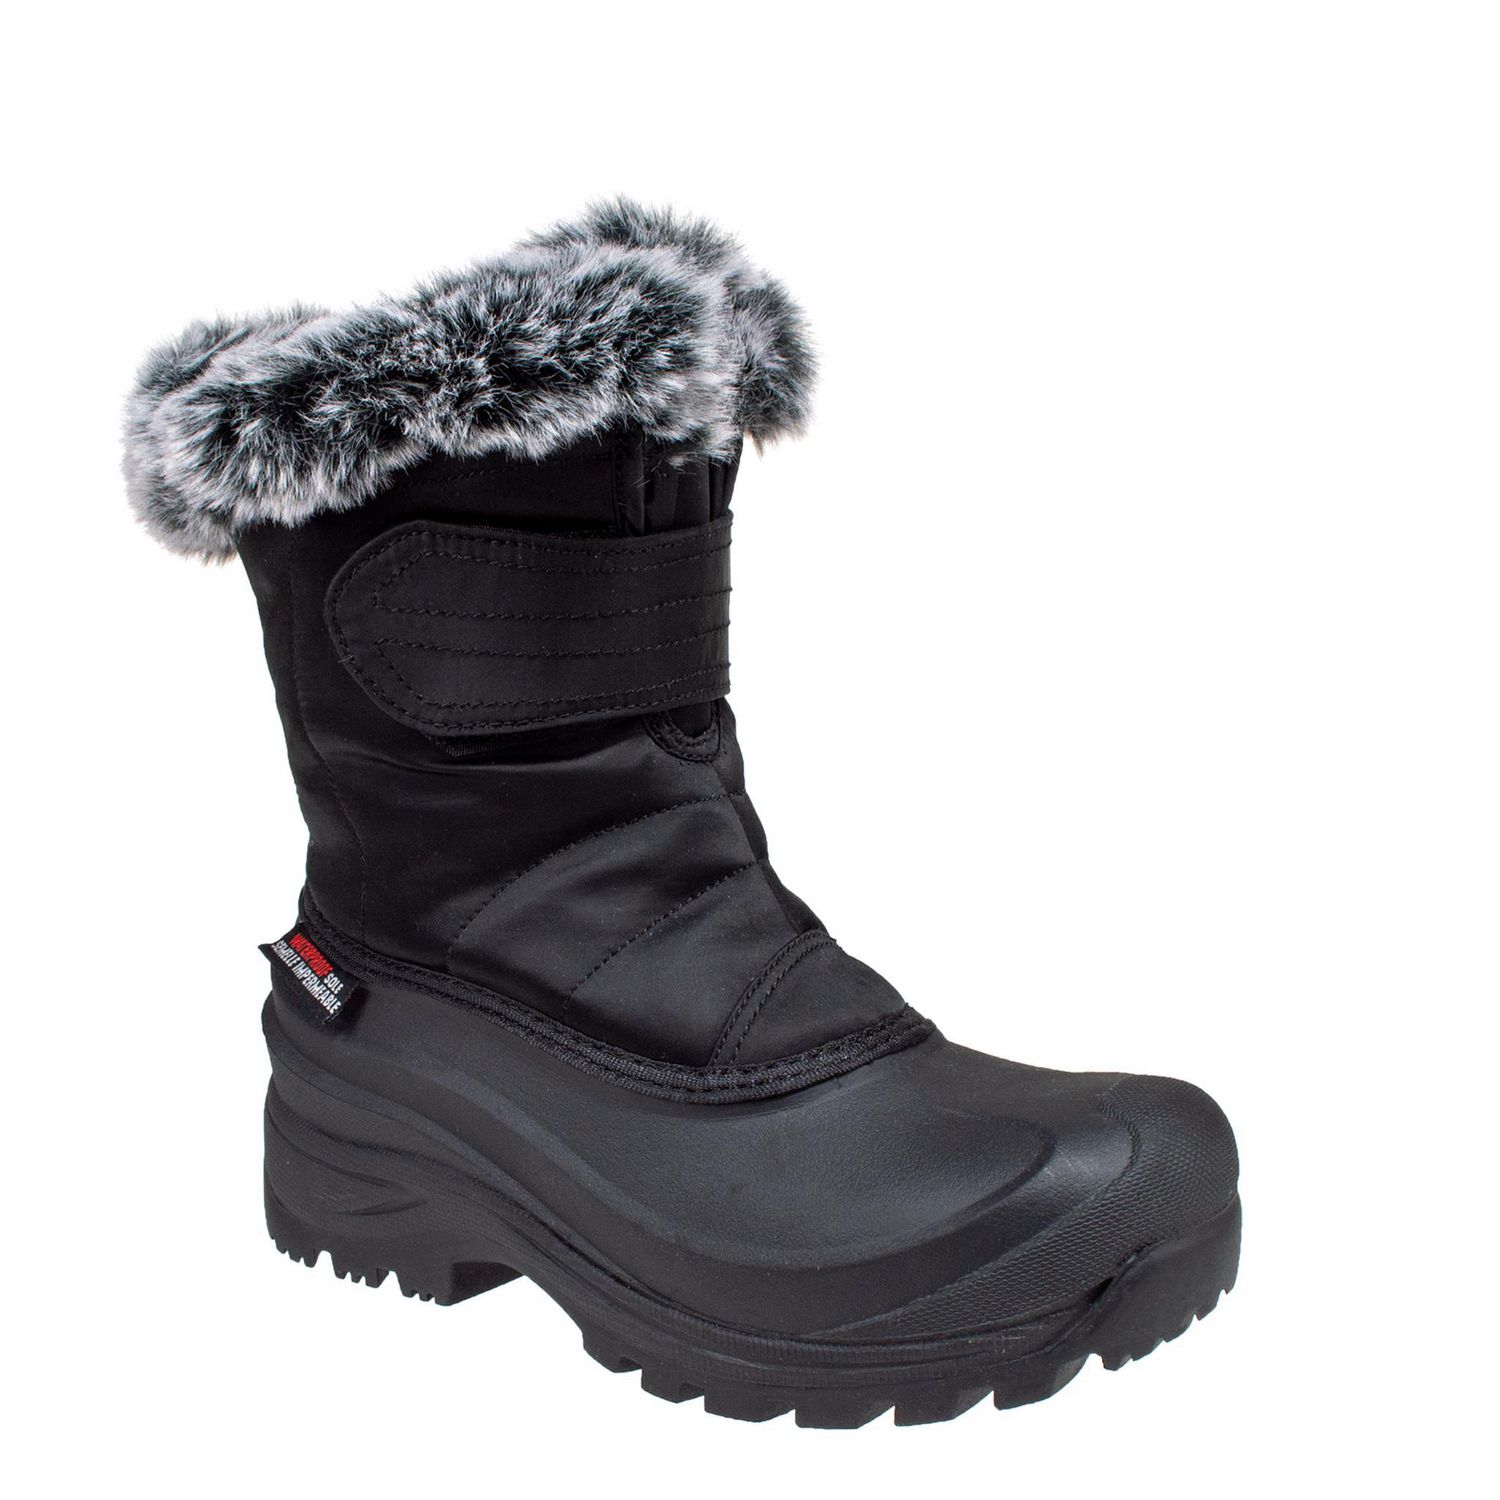 Ice Fields Women's Glenna Winter Boots | Walmart Canada